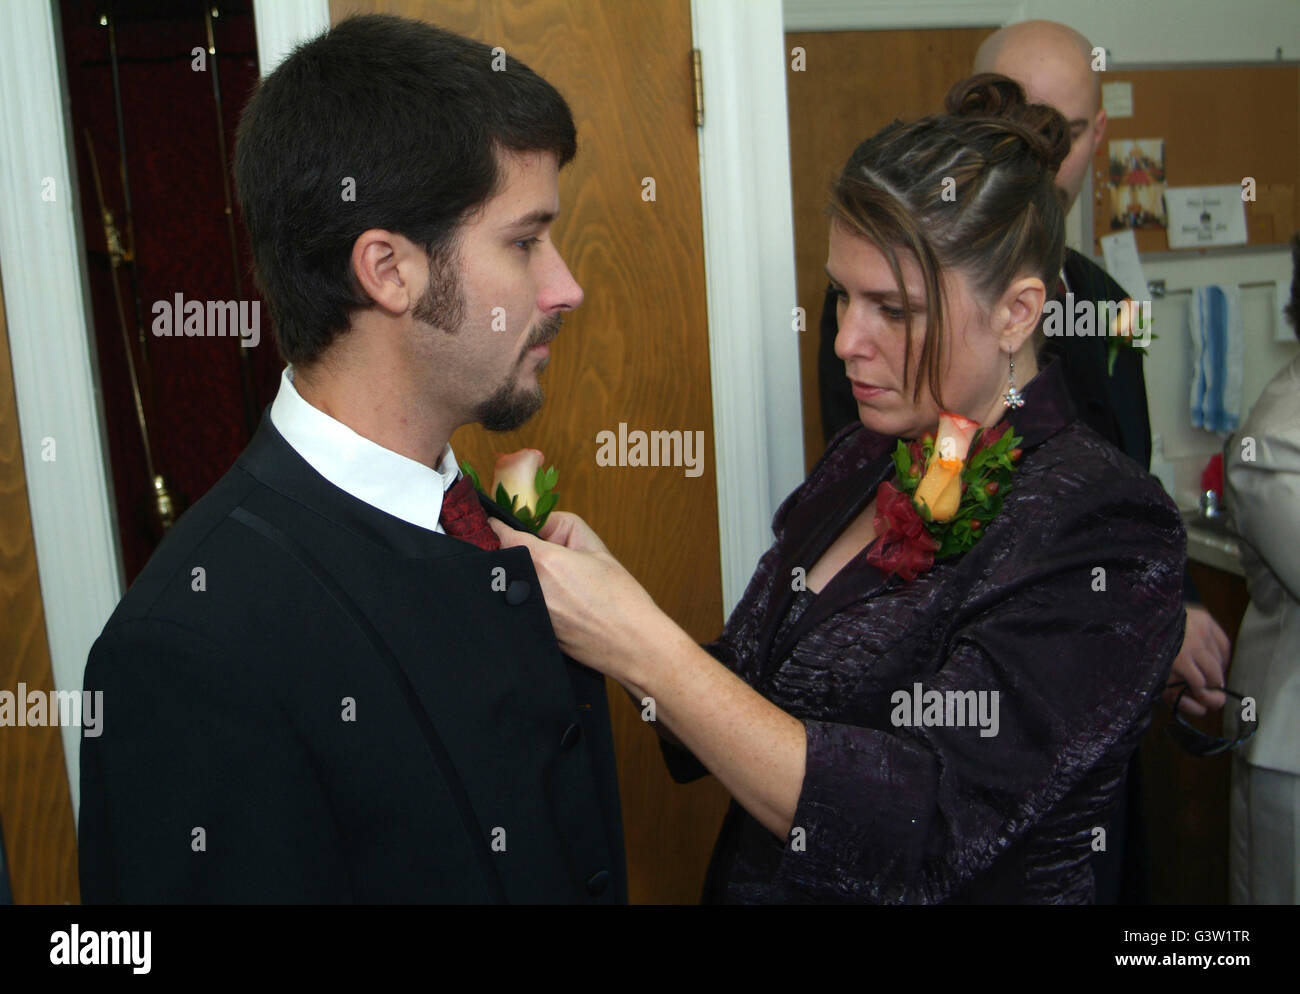 woman pinning corsage on man Stock Photo